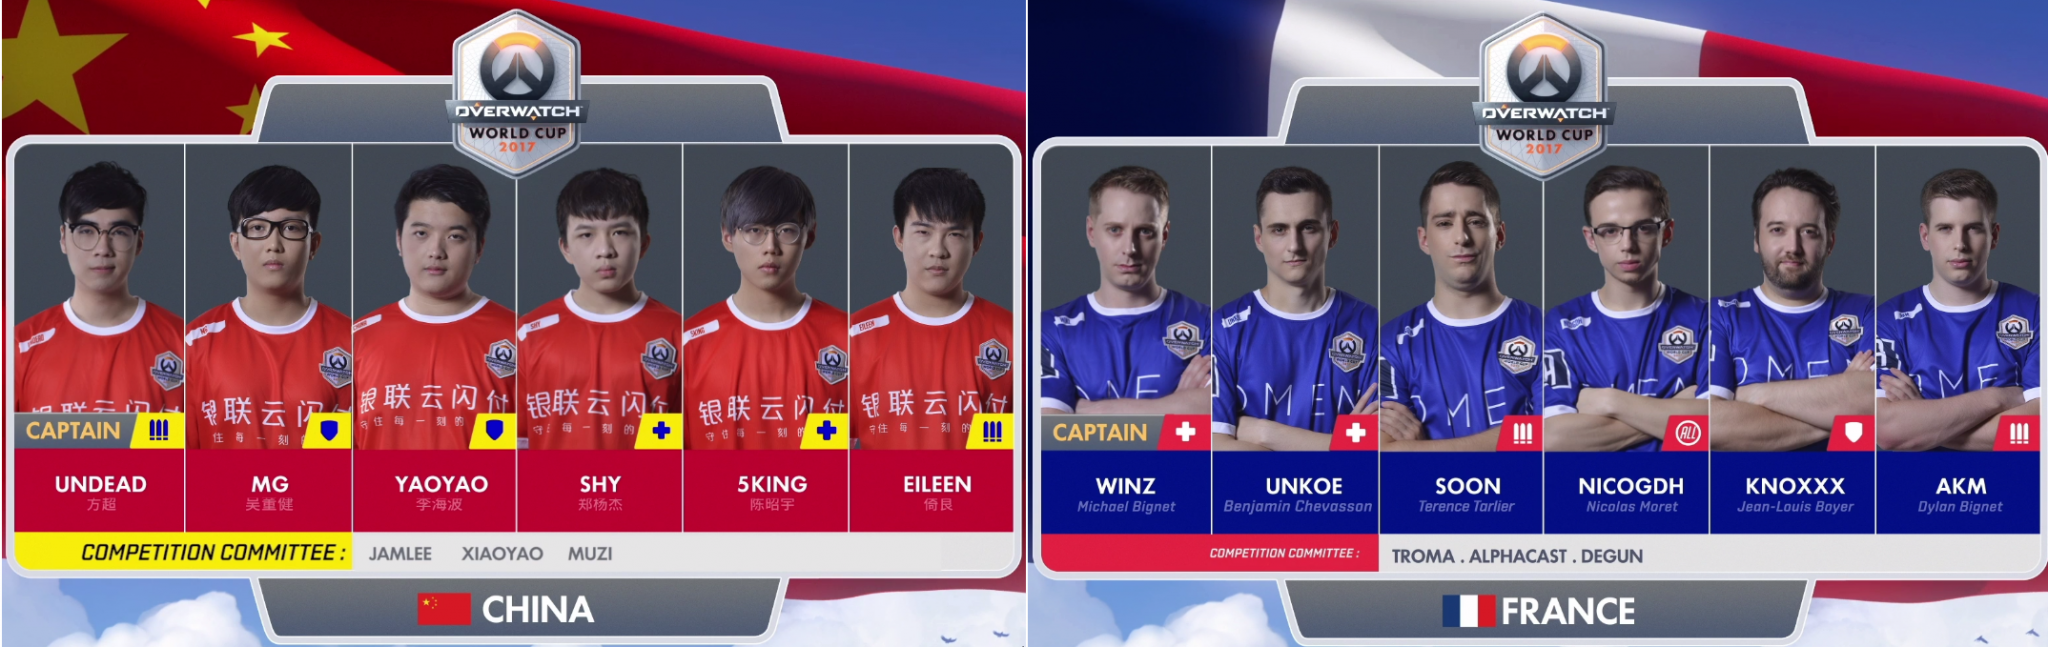 Overwatch World Cup Shangai qualifier